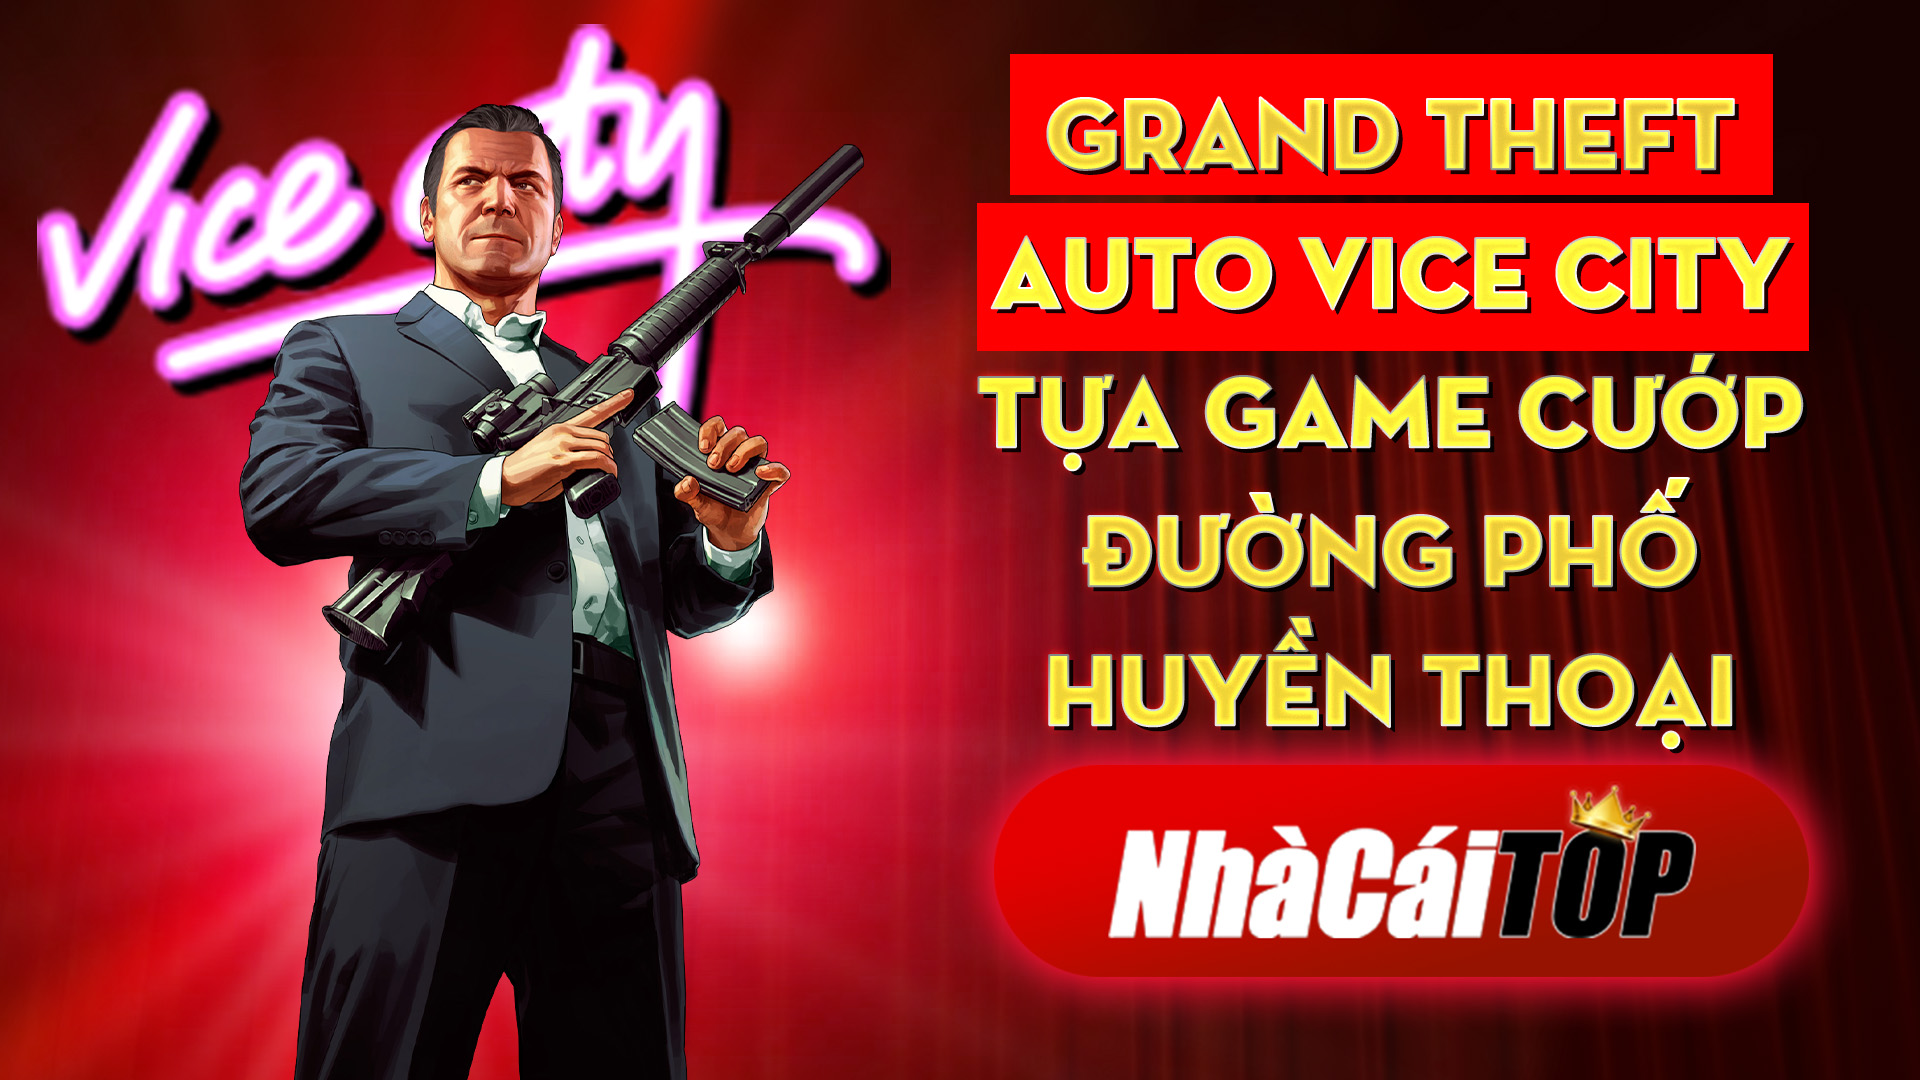 327 Grand Theft Auto Vice City – Tua Game Cuop Djuong Pho Huyen Thoai